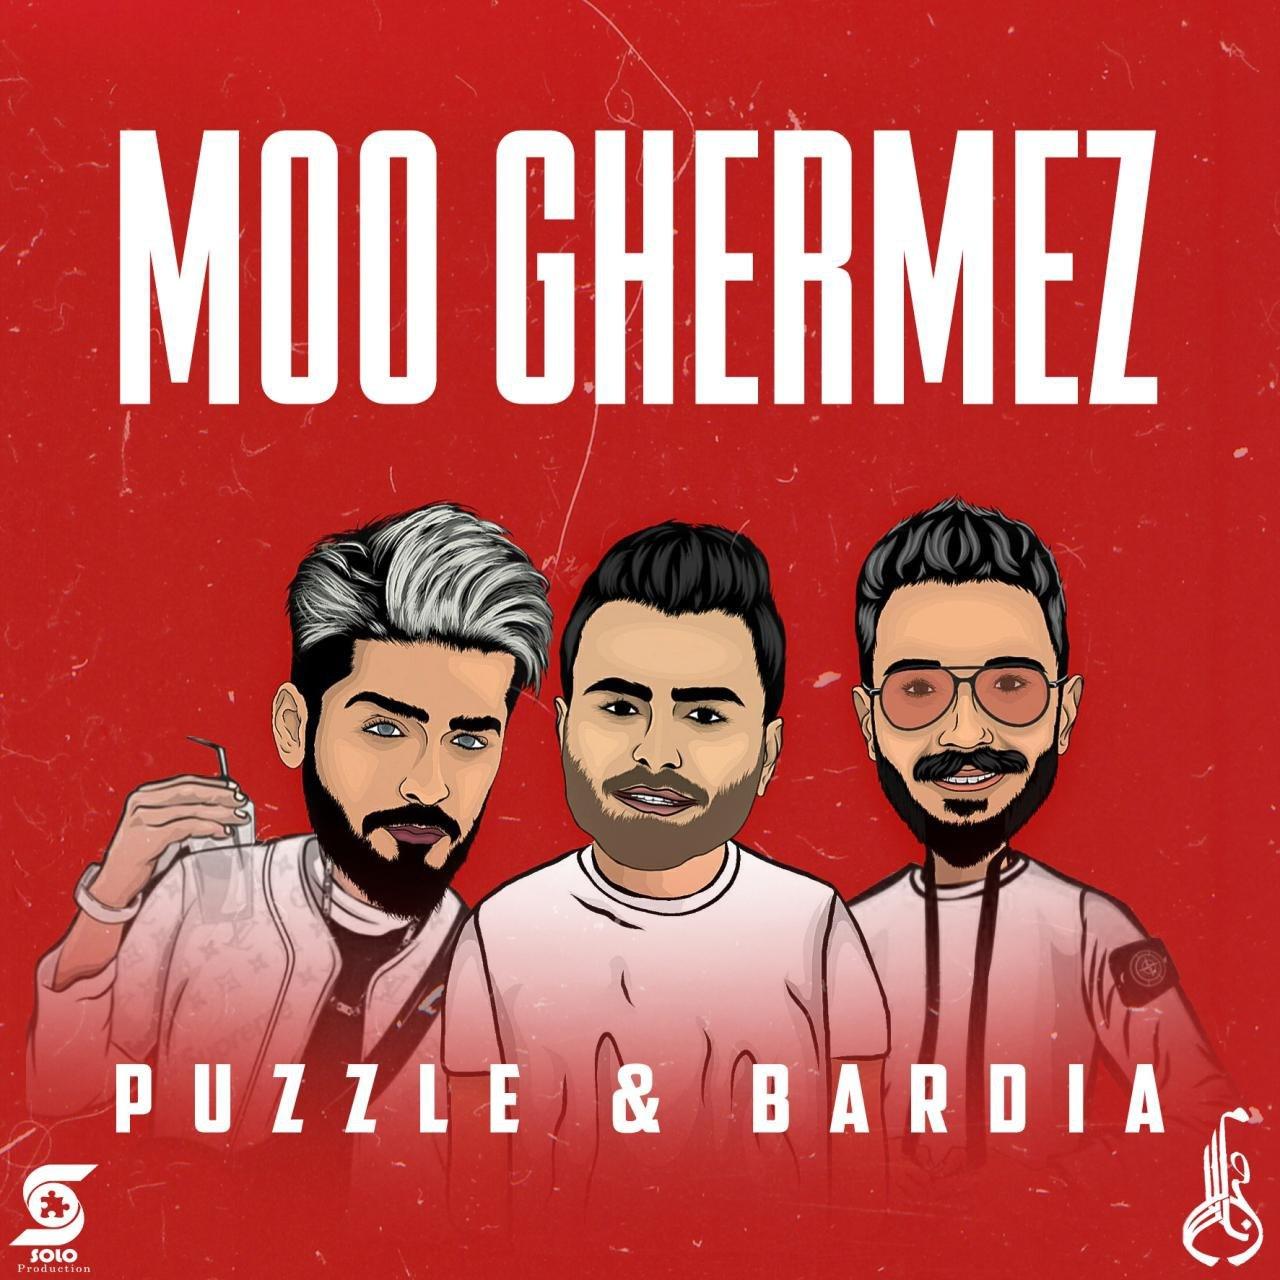 Puzzle Band - Moo Ghermez - دانلود آهنگ پازل بند به نام مو قرمز